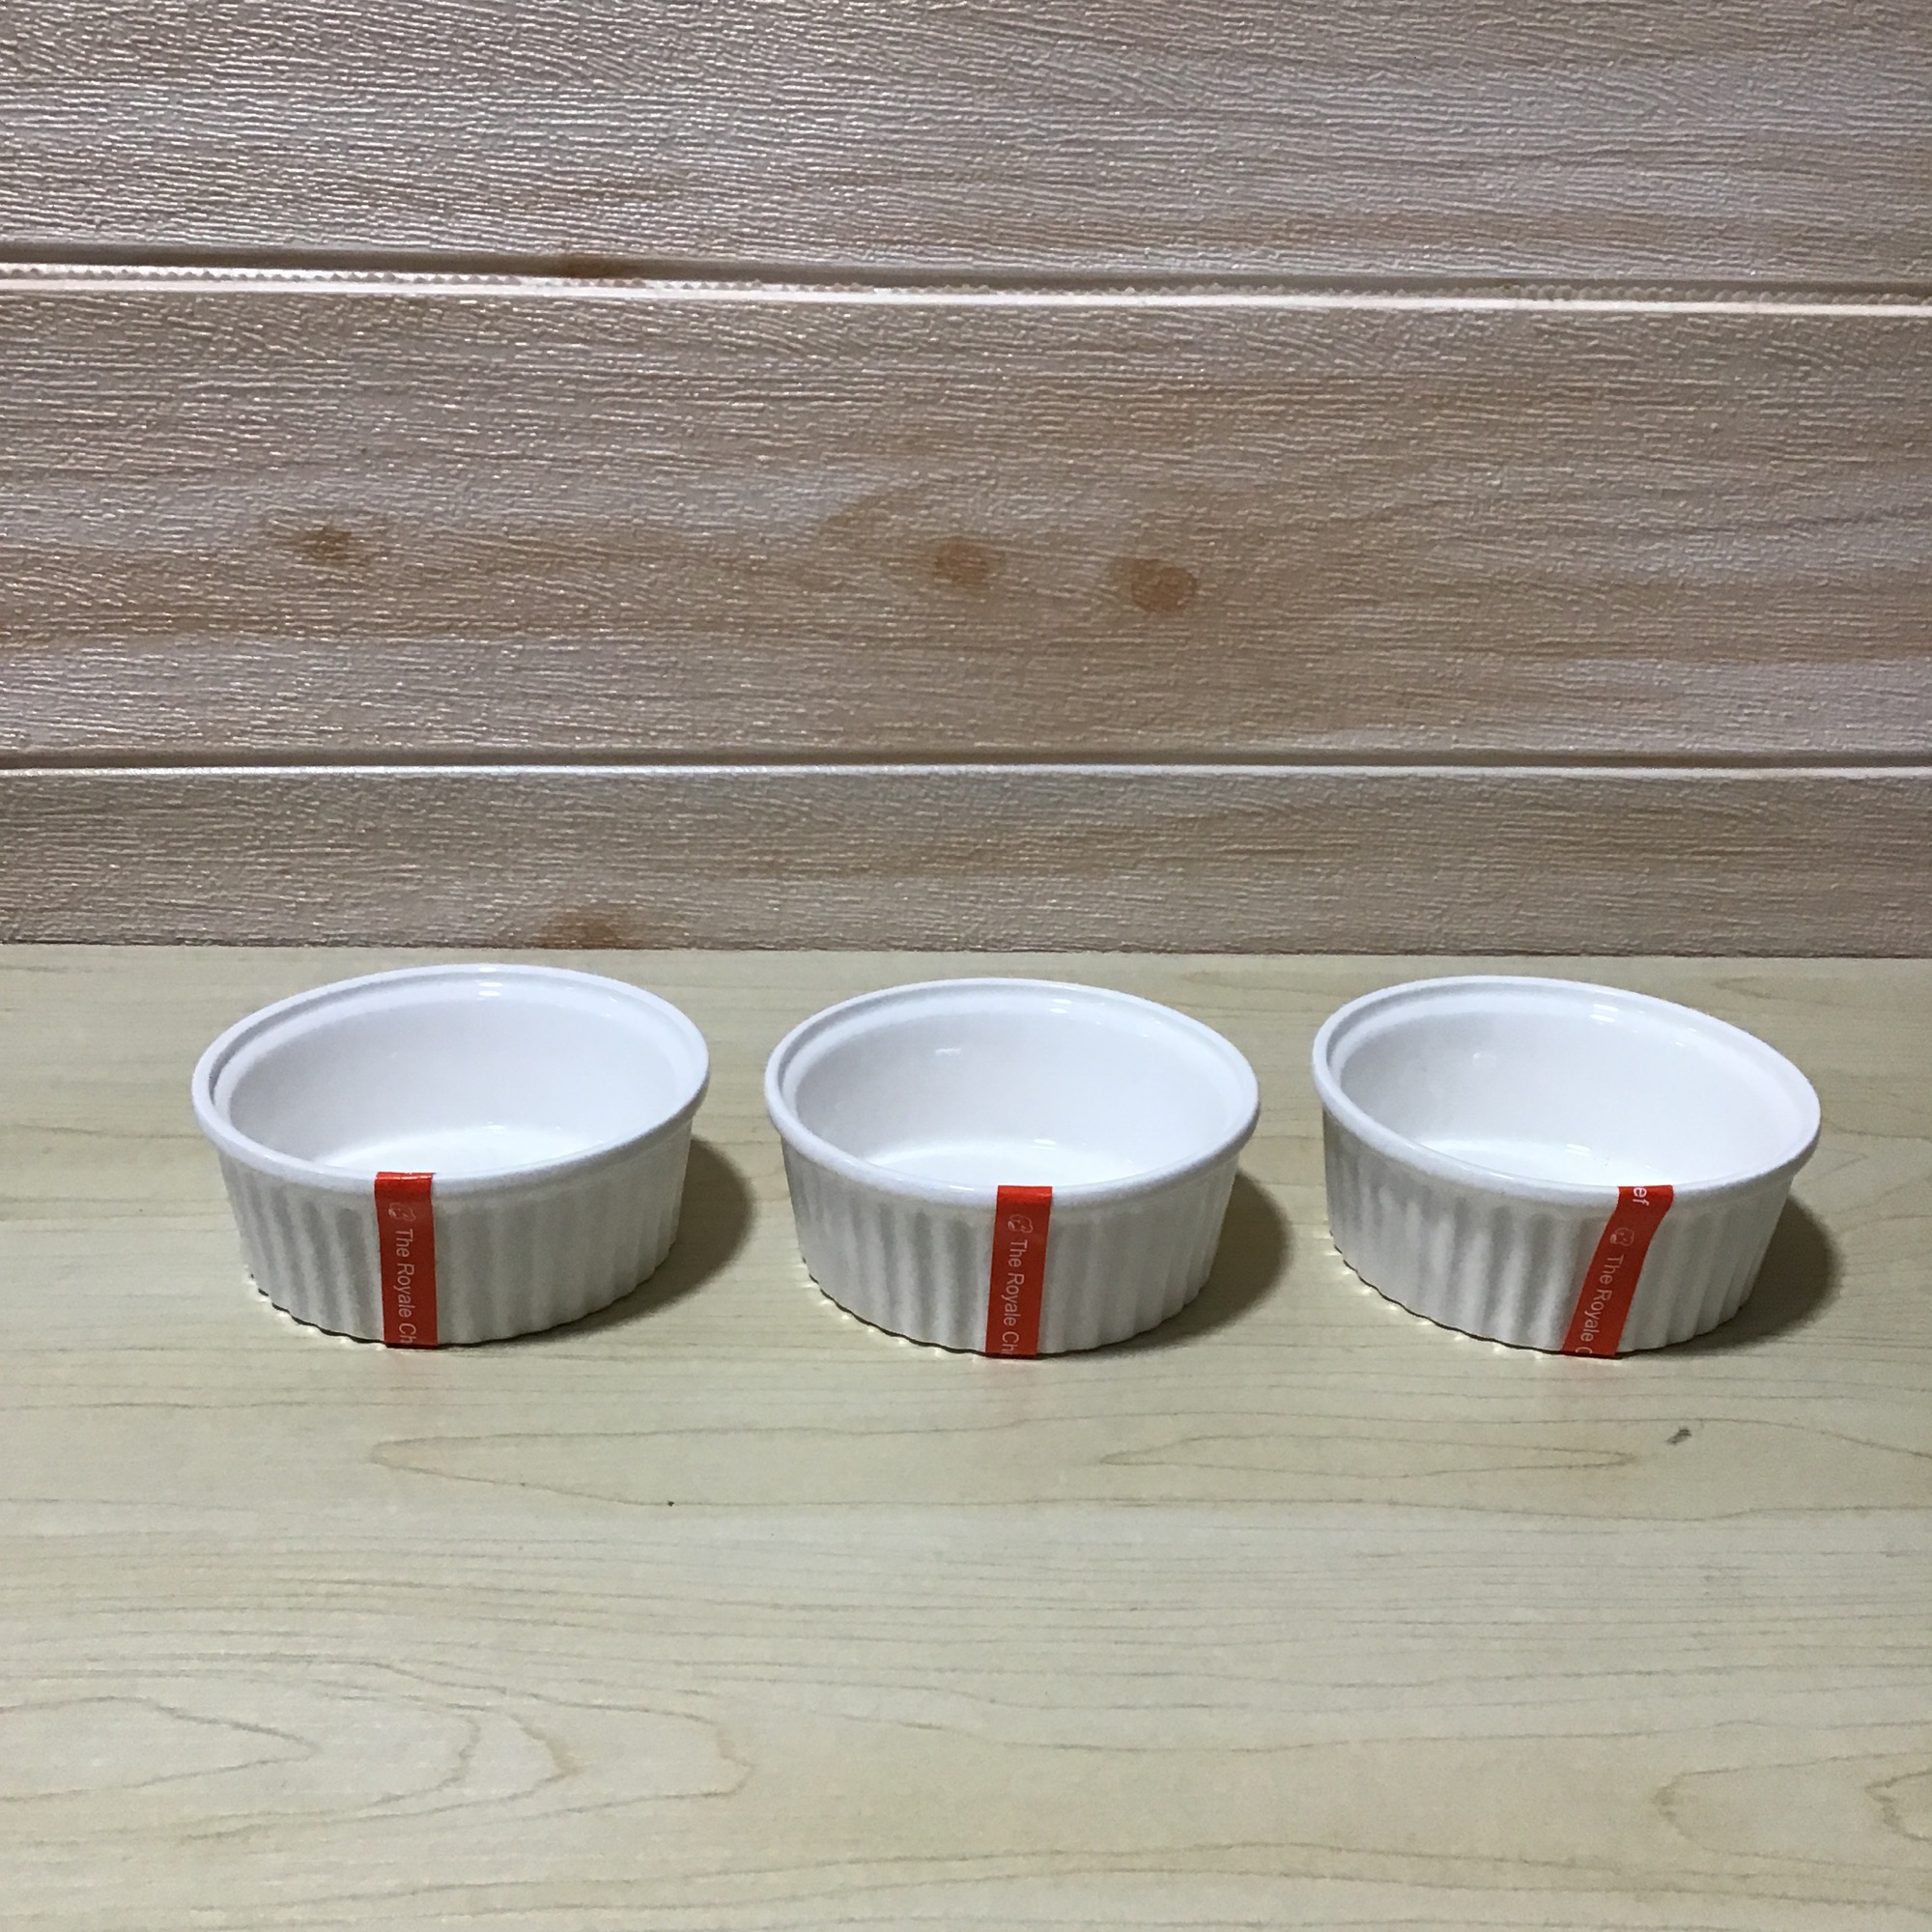 Repeat Application Ramekin Double Skin Milk Cup Ceramic Bowl Ramekins Color : 2 Pieces-Blue Glaze Easy to Clean Souffle Cups Suitable for Restaurant Kitchen Restaurant